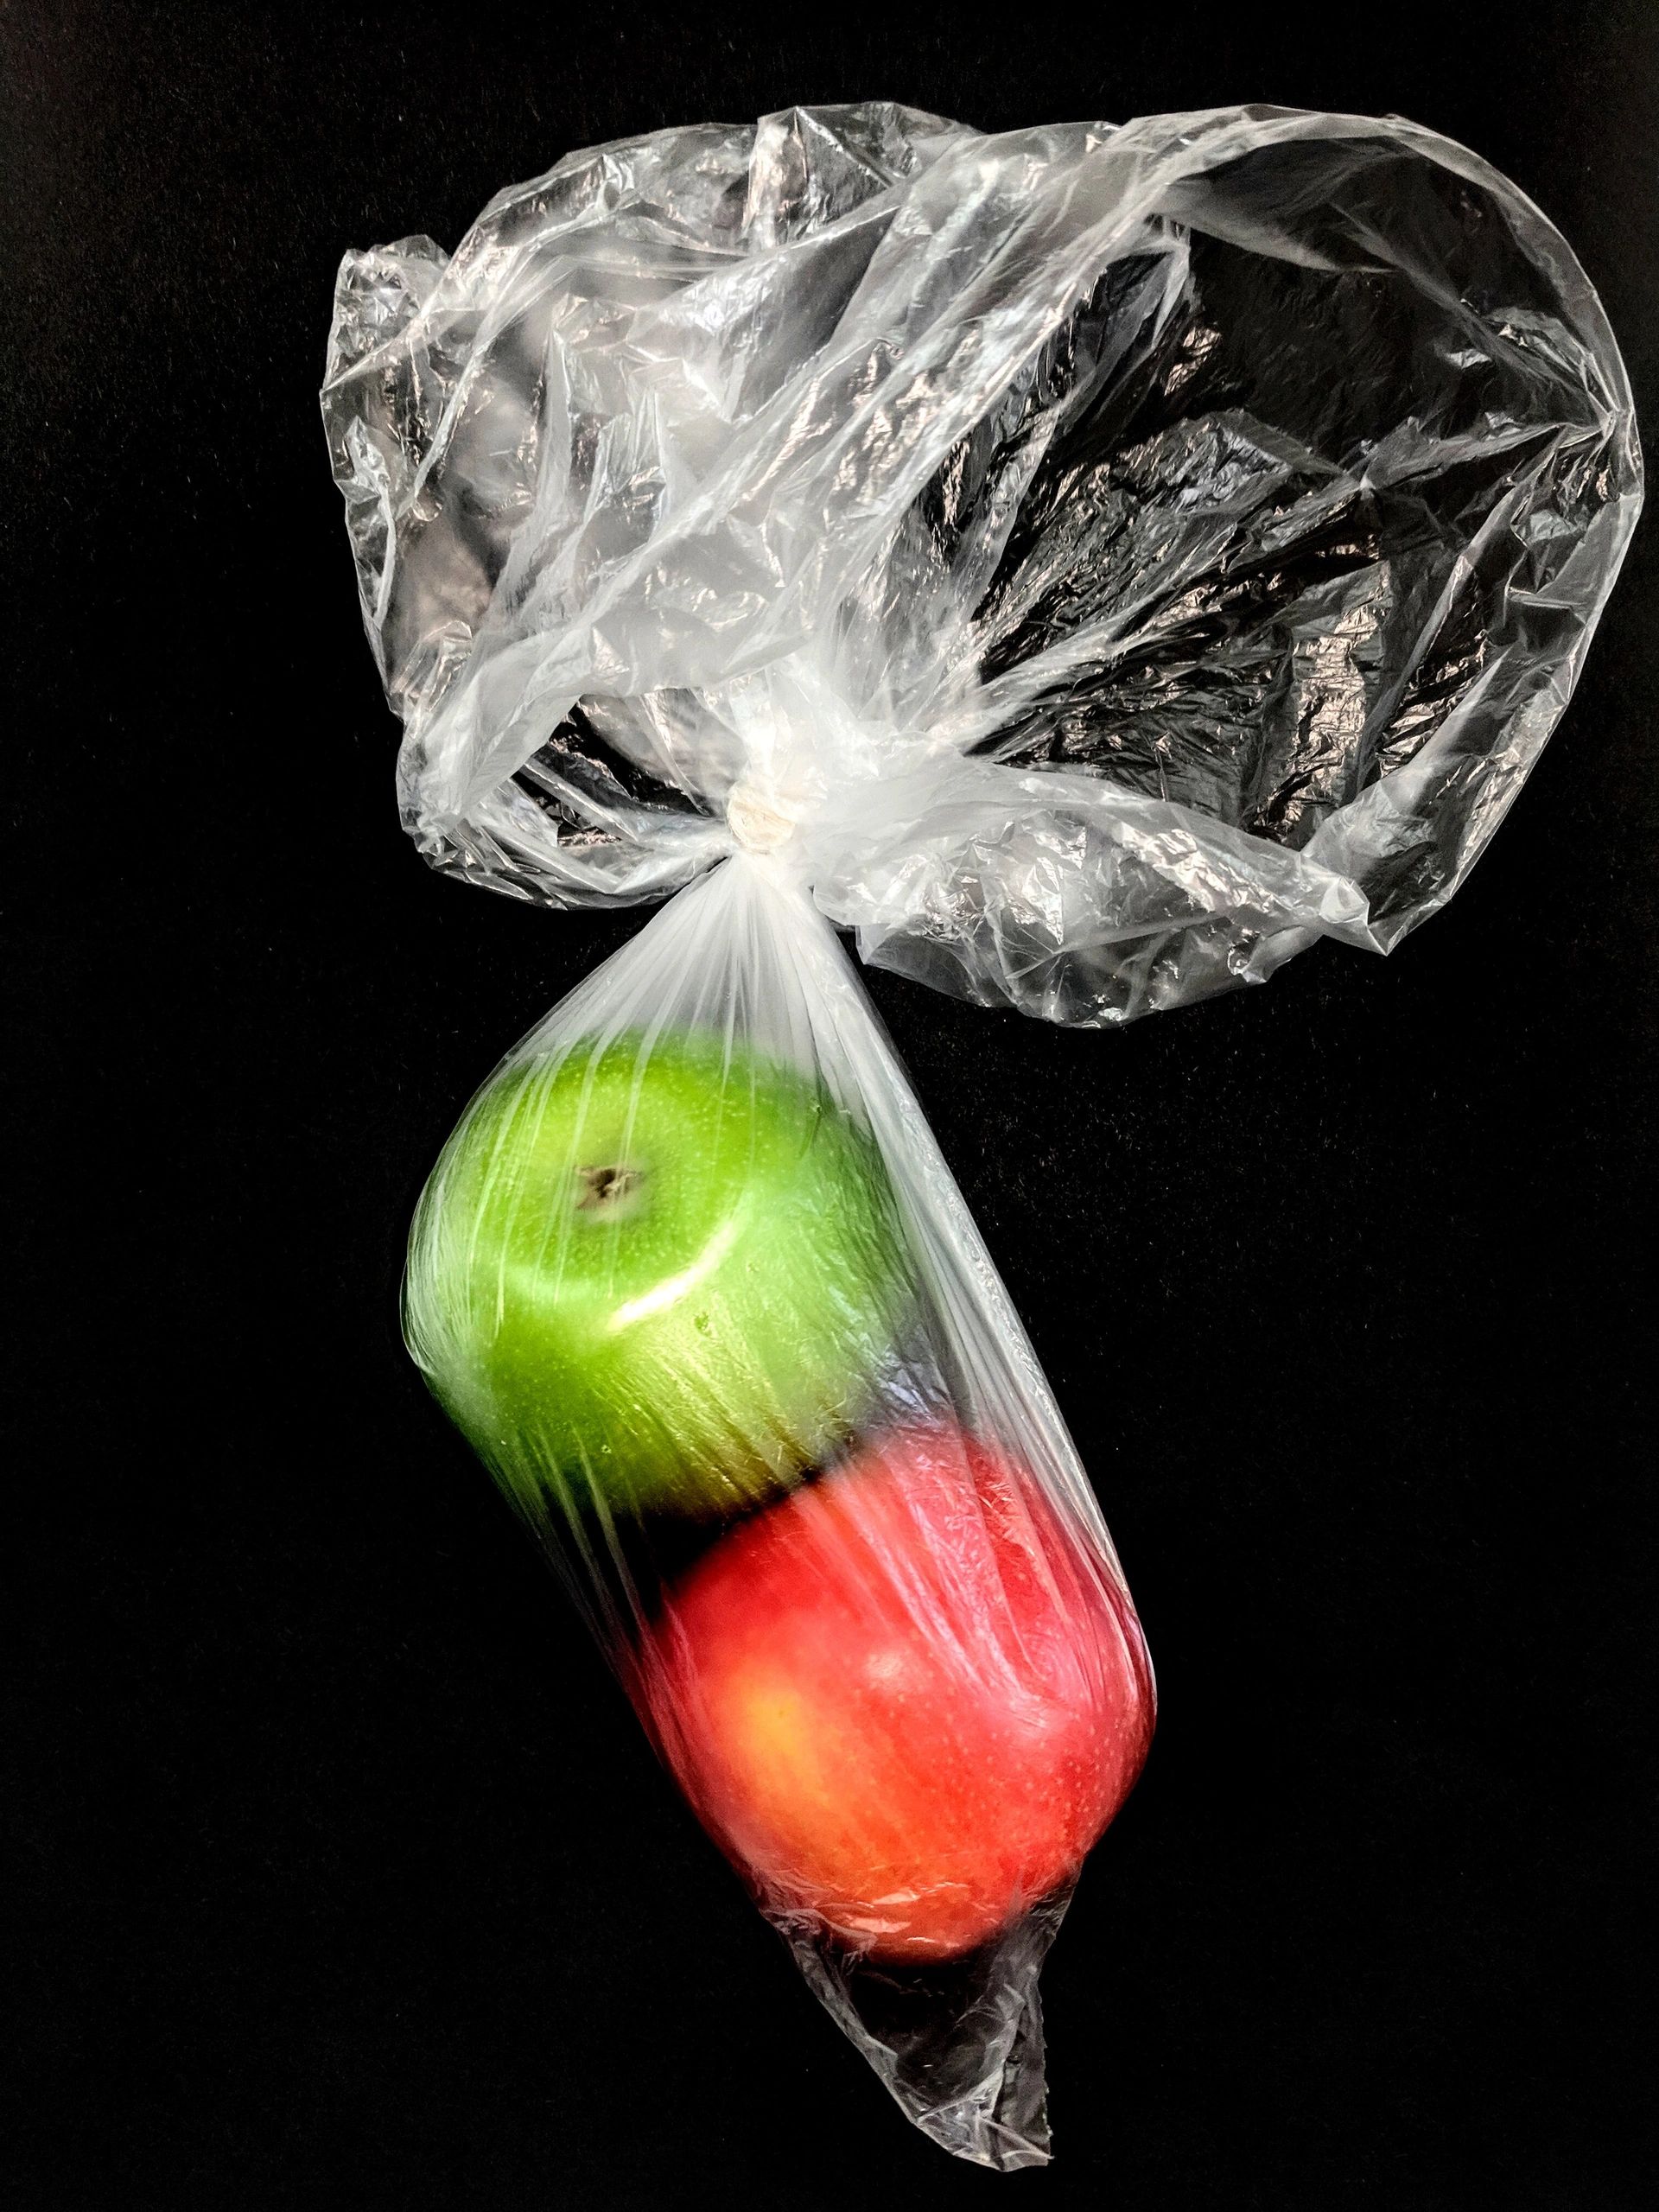 Photo by Sophia Marston on Unsplash
Plastic Bag with Fruit